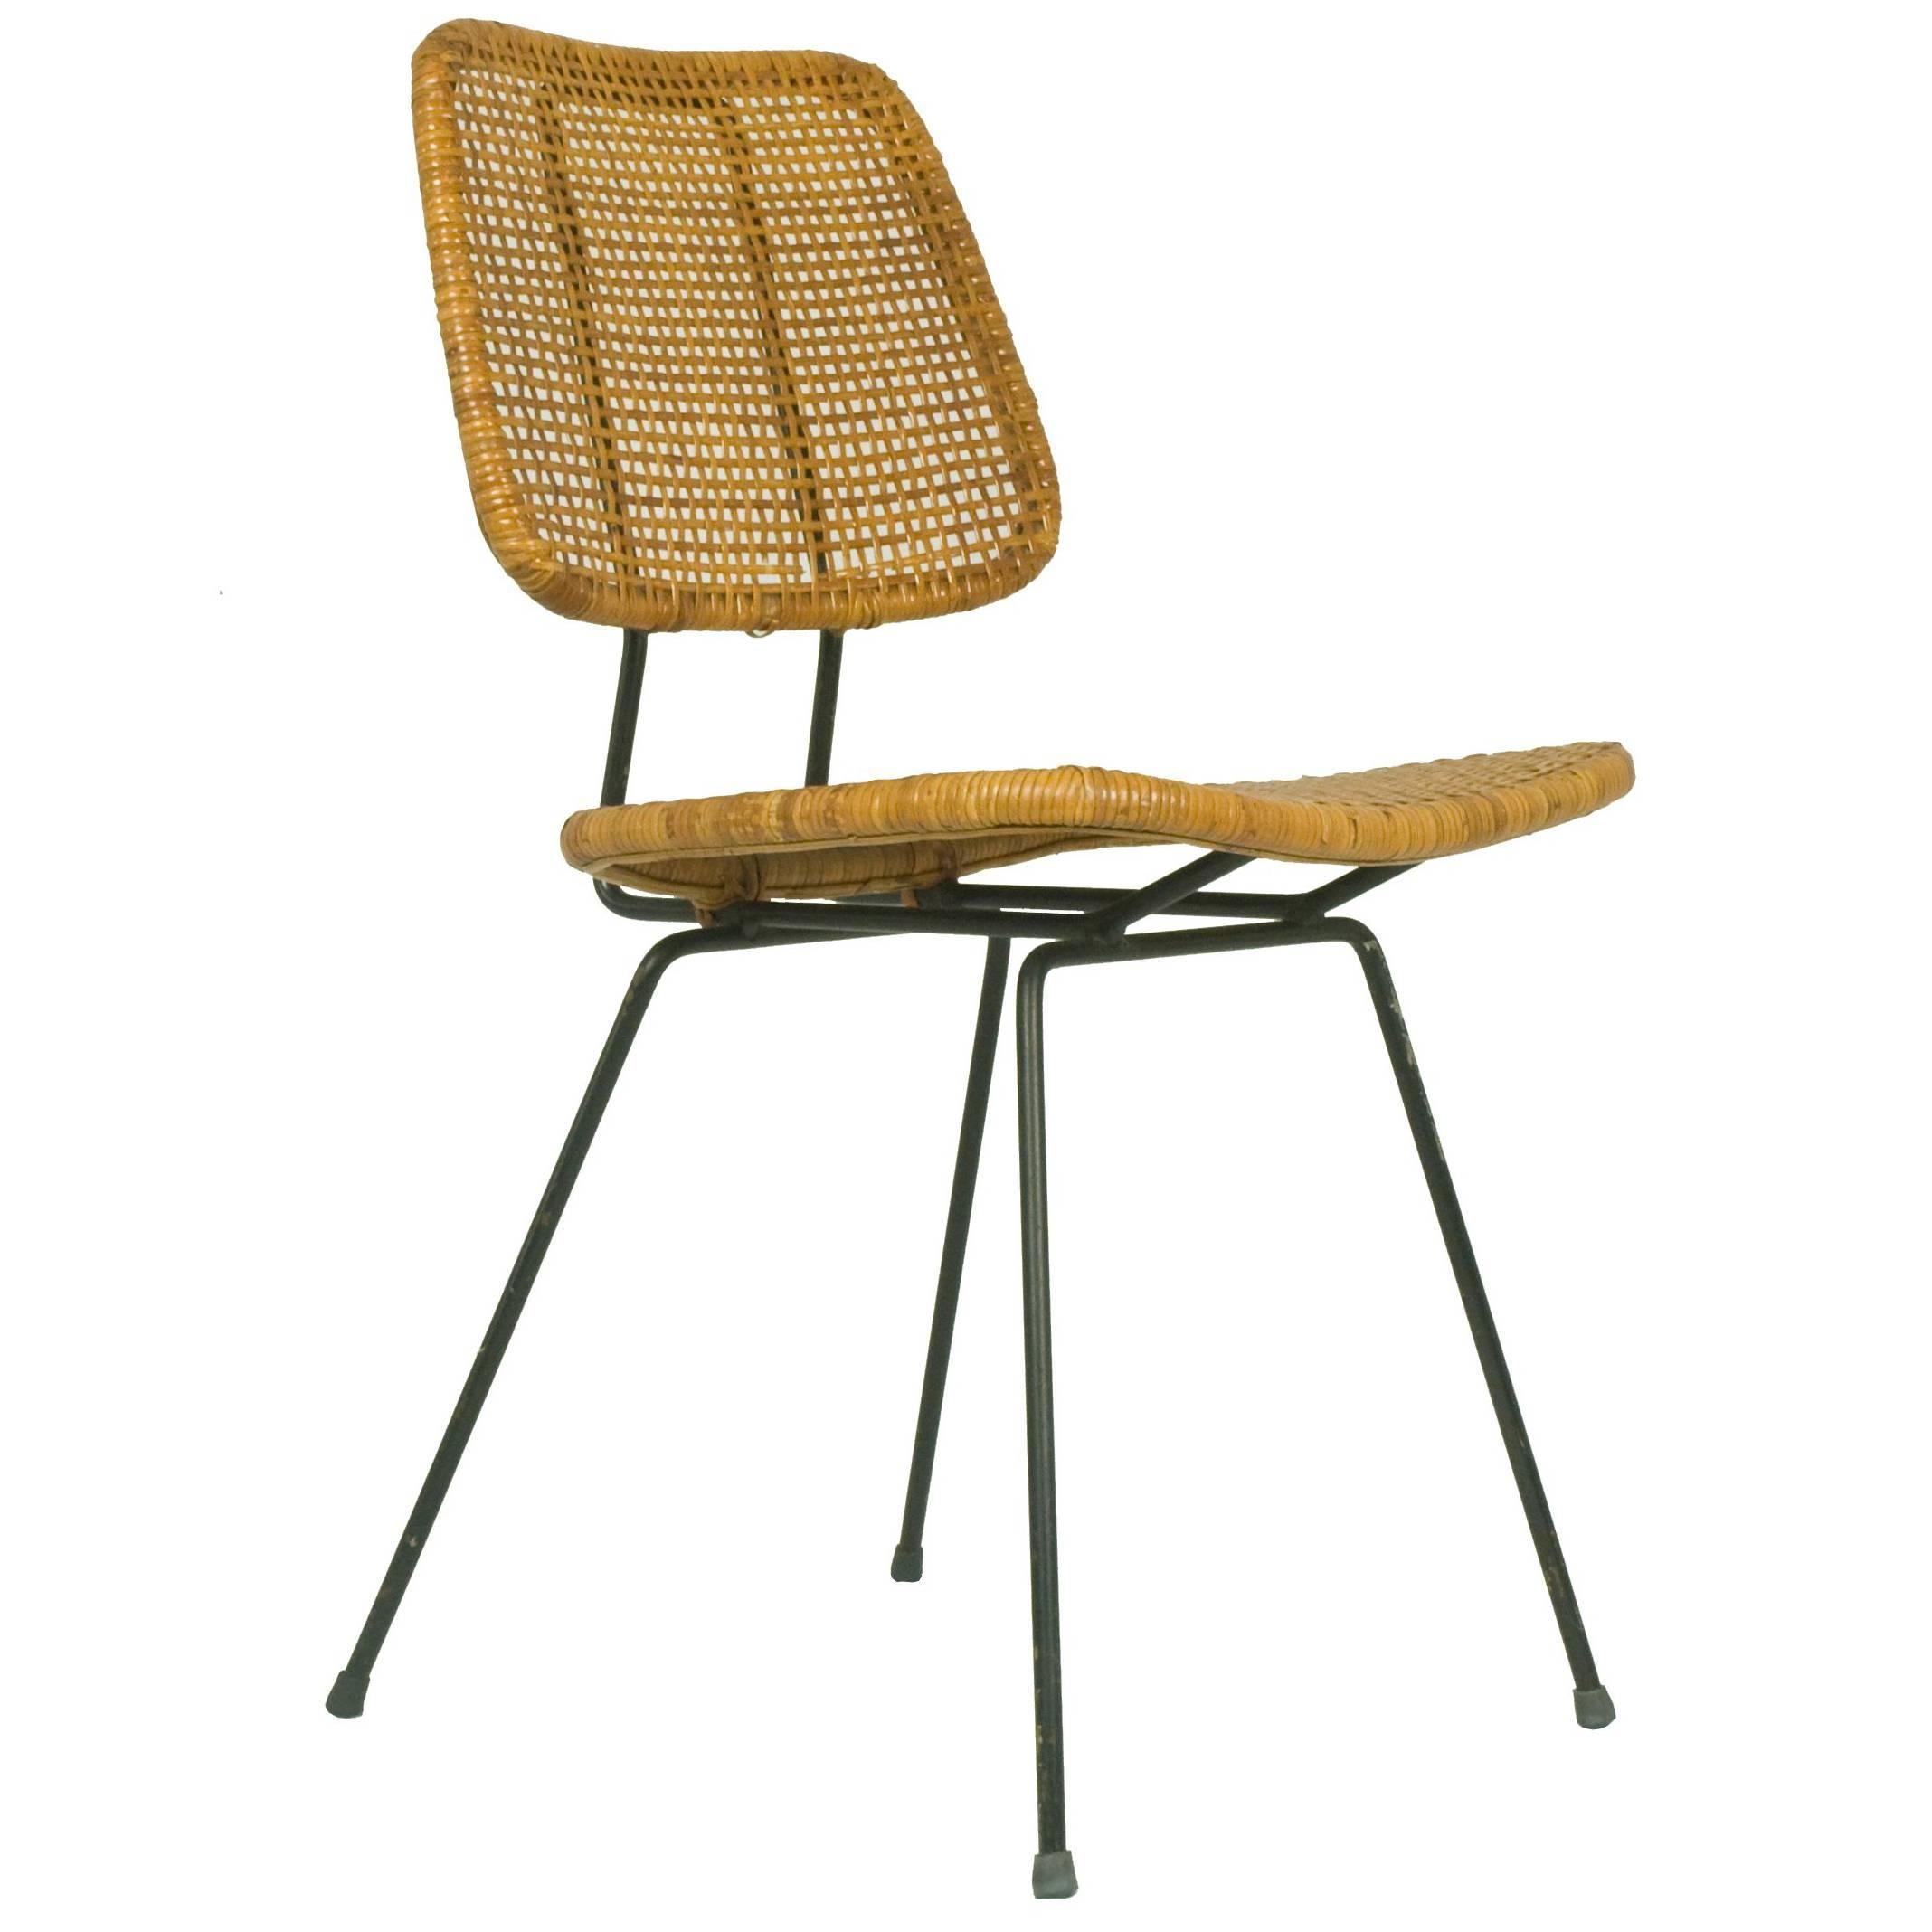 Midcentury Italian Iron and Rattan Chair